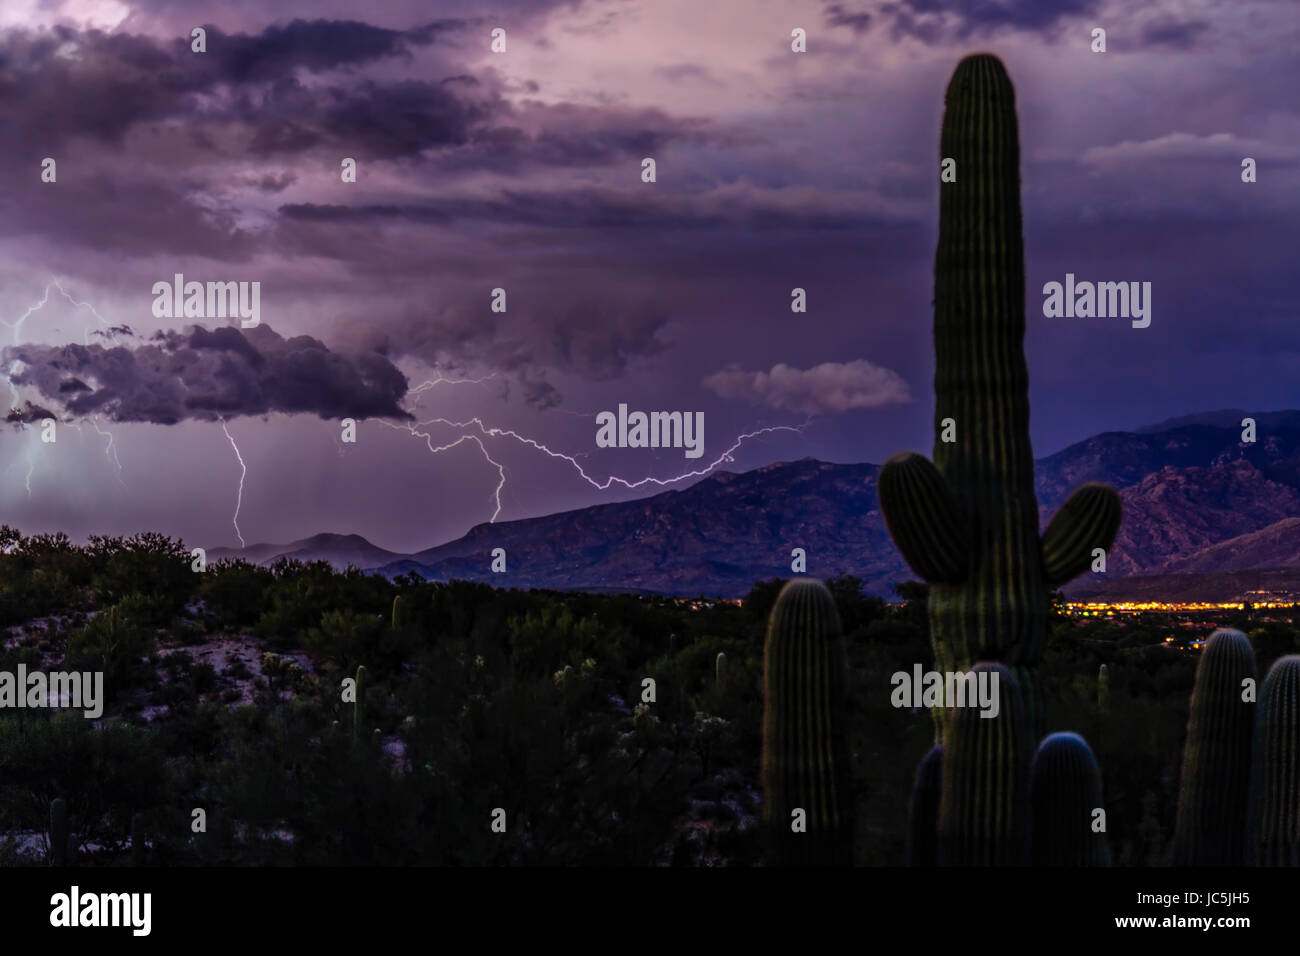 An intense summer monsoon storm brings drama to the sonoran desert near Tucson, Arizona. Stock Photo